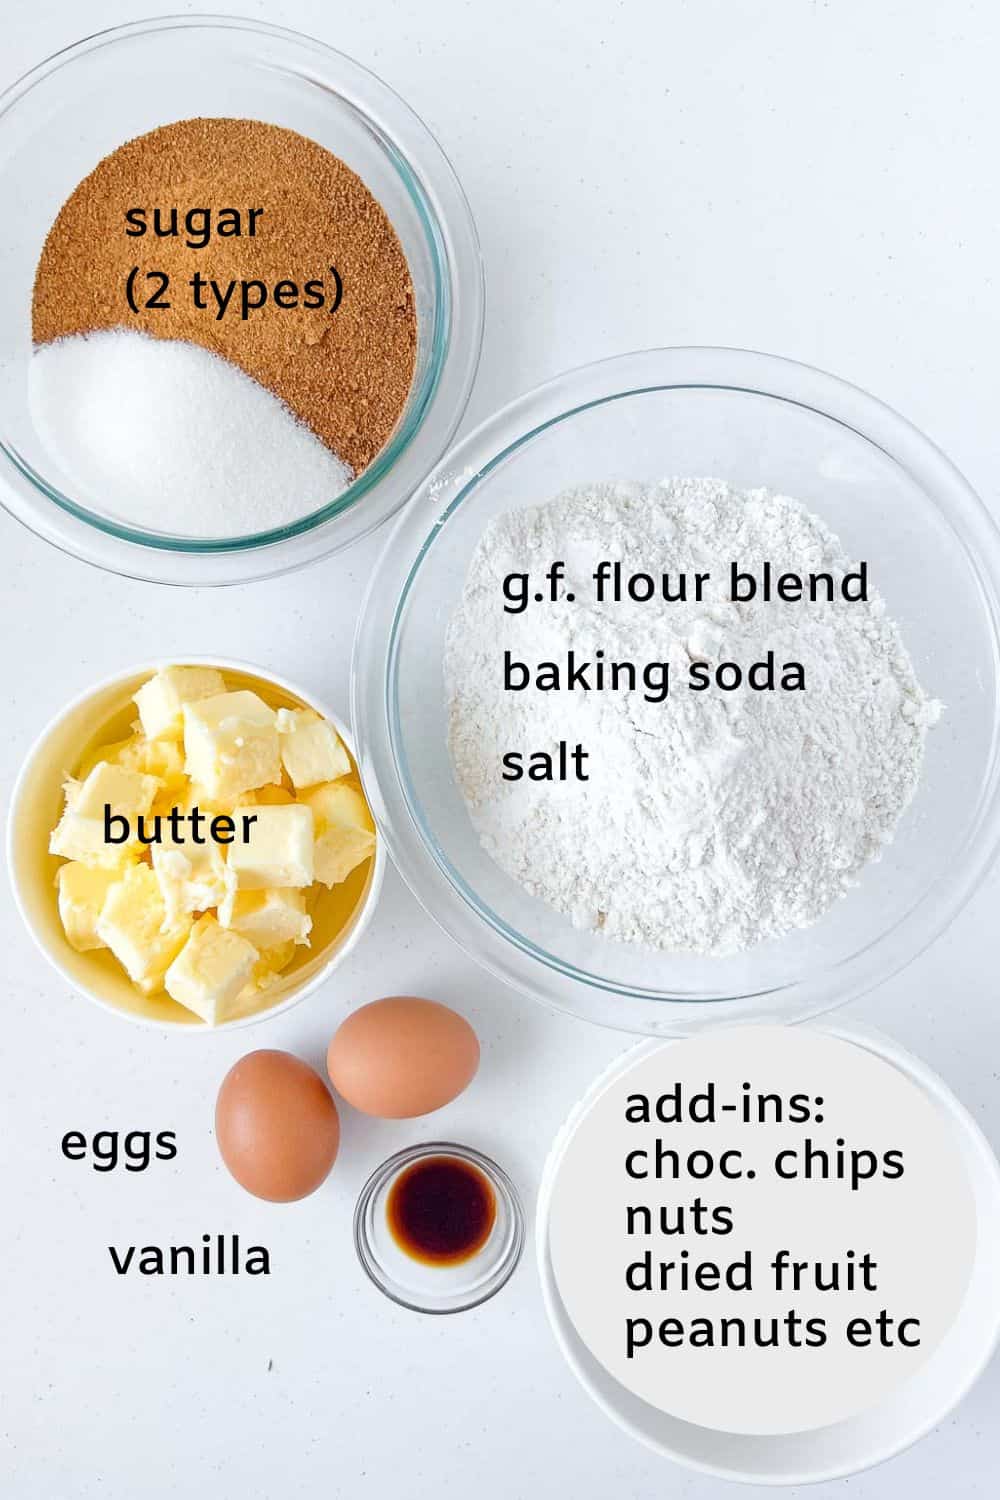 Labelled ingredients for gluten-free Kitchen Sink Cookies. Two types of sugar, gluten-free flour, baking soda, salt, eggs, vanilla, butter and add-ins.